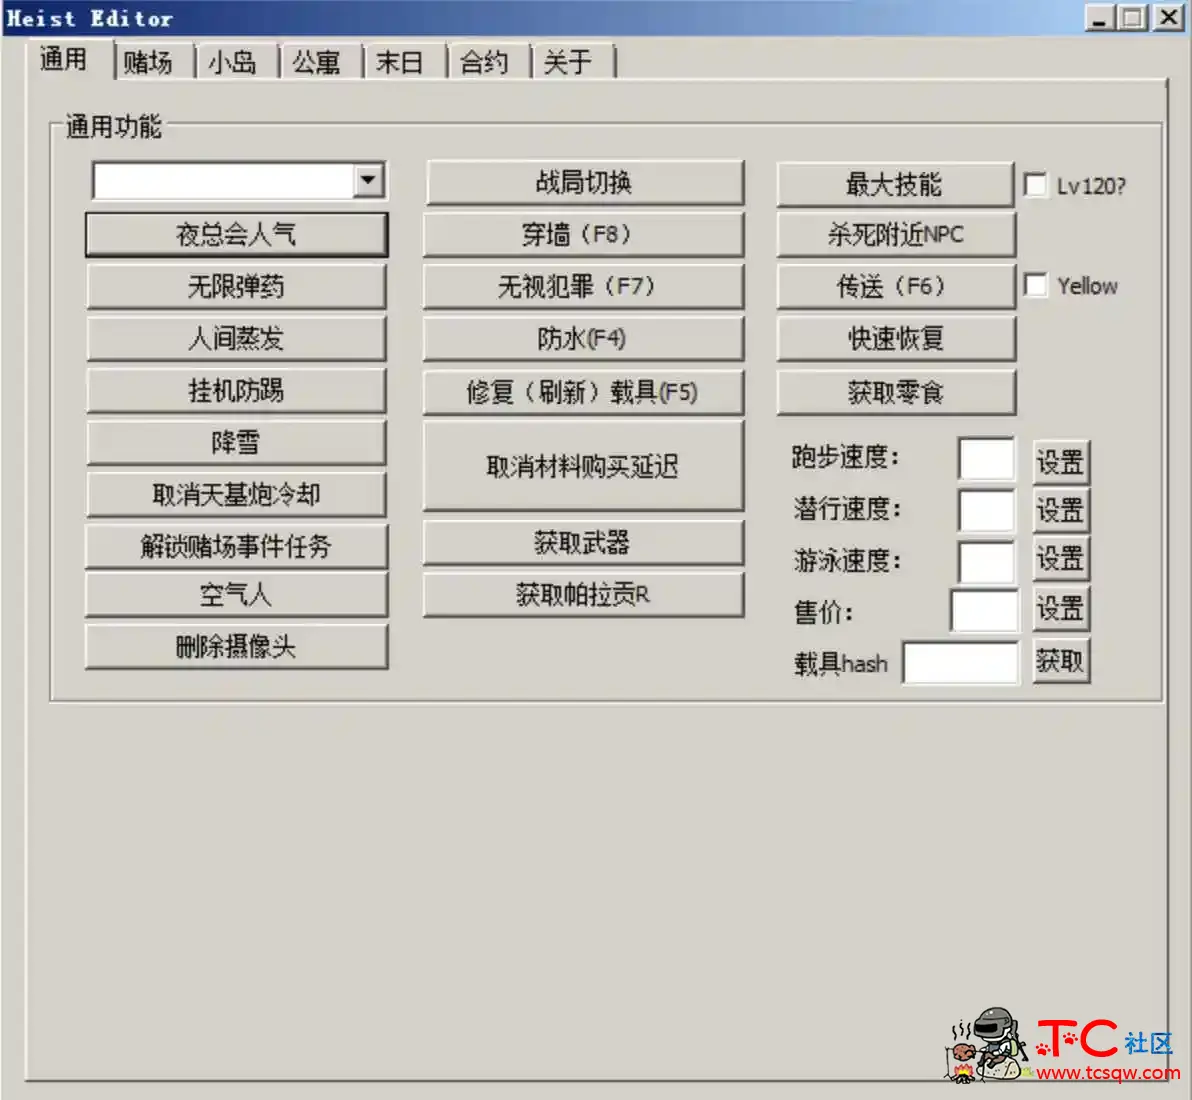 GTA5 Heist Editor外部抢劫编辑器 v3.5.7 屠城辅助网www.tcfz1.com4820